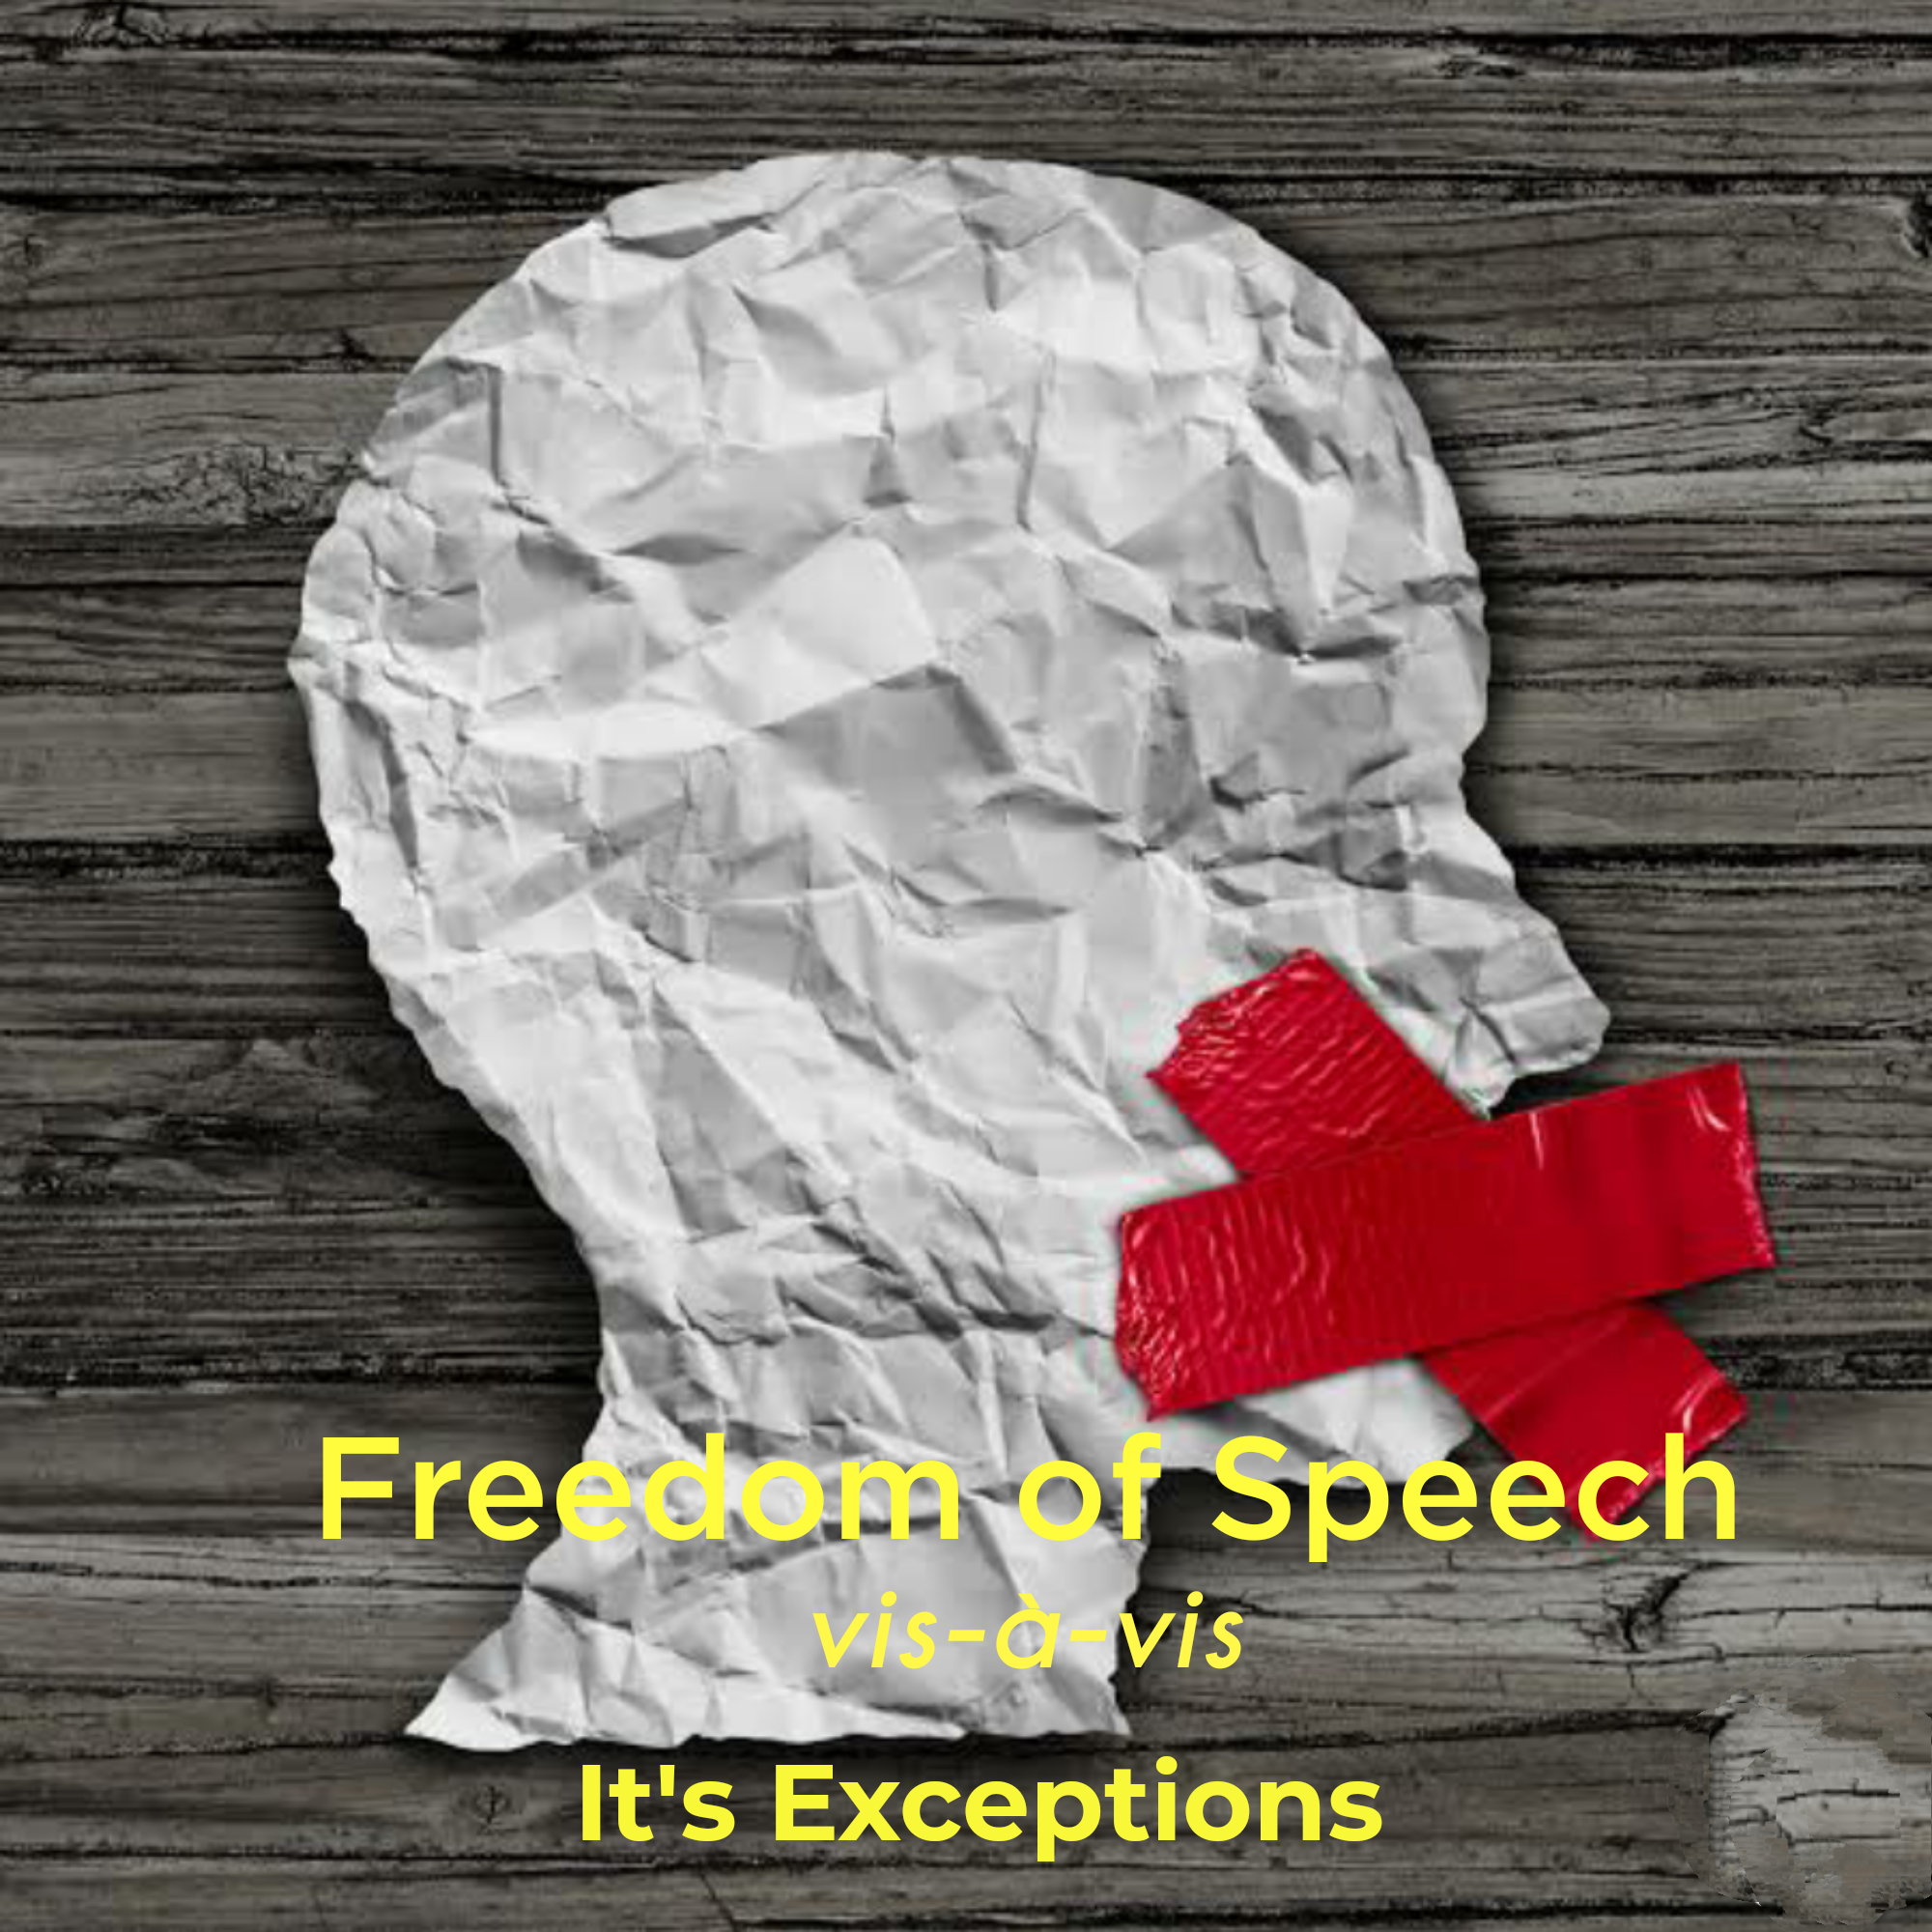 Freedom of Speech vis-à-vis It’s Exceptions